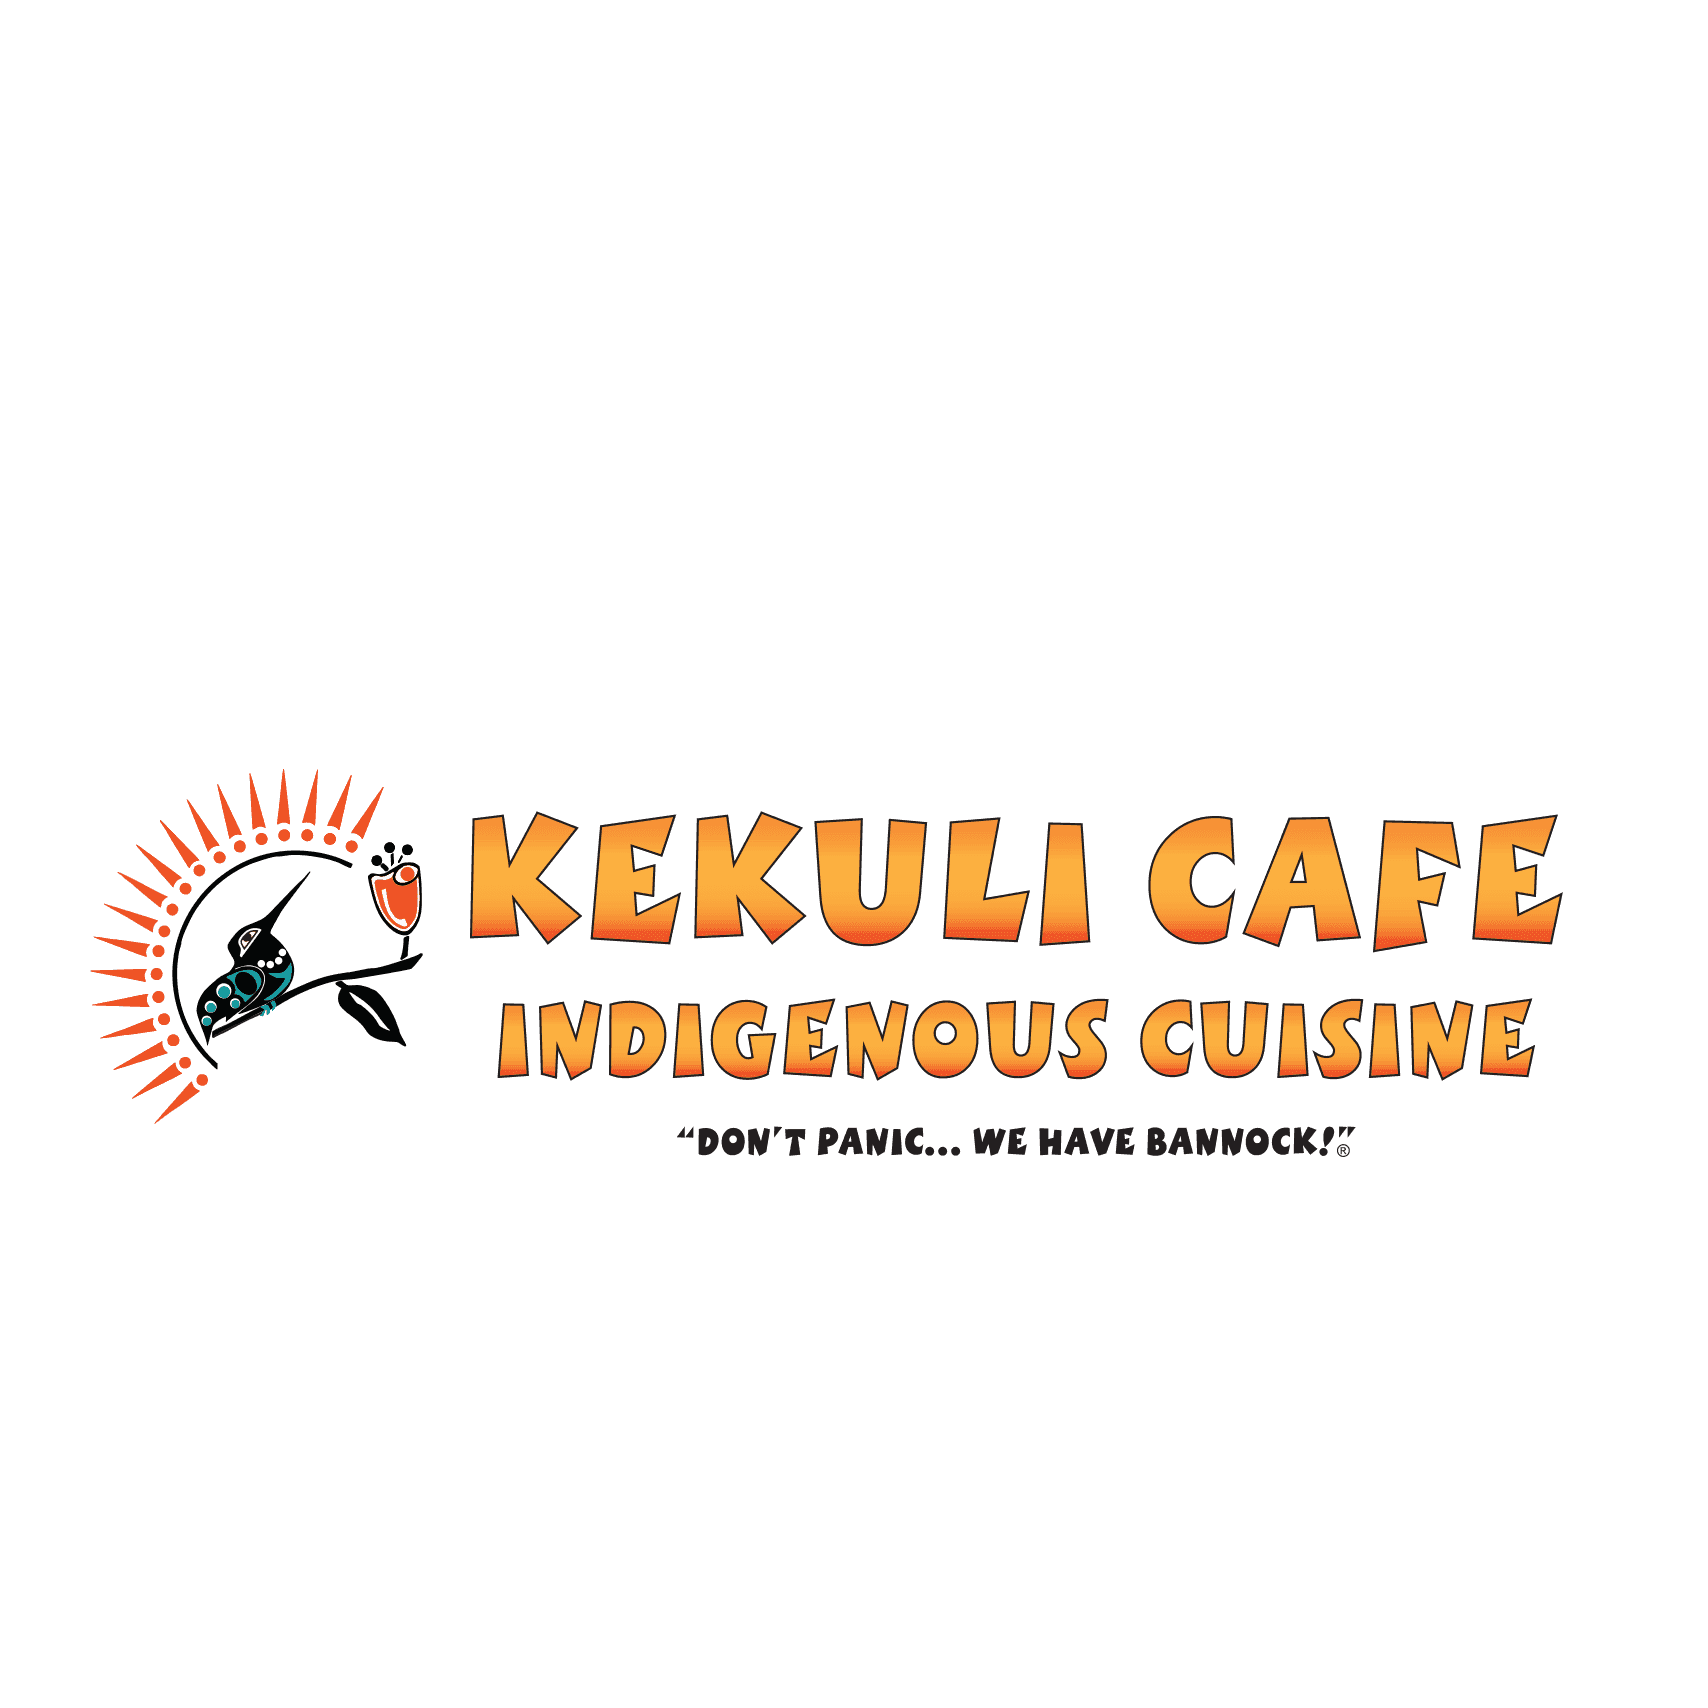 <p>Kekuli Cafe</p><p>Indigenous cuisine</p> logo